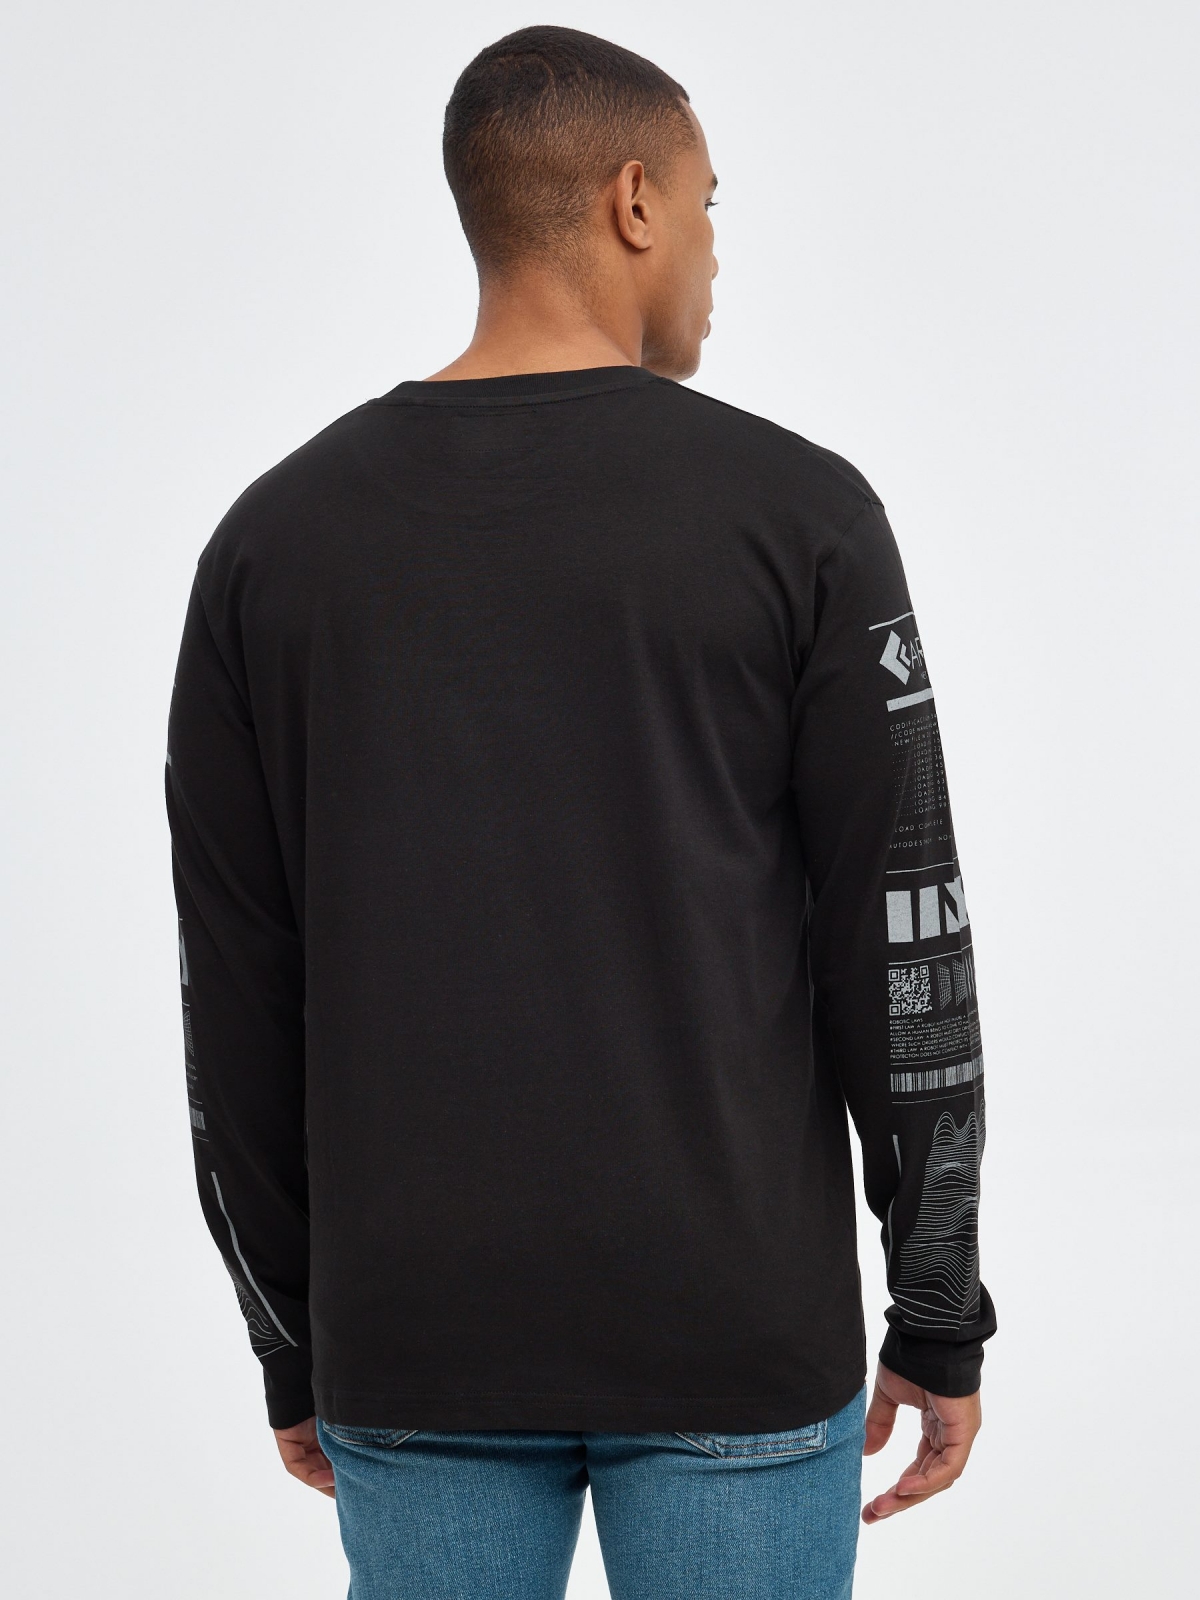 Camiseta cyber print en las mangas negro vista media trasera